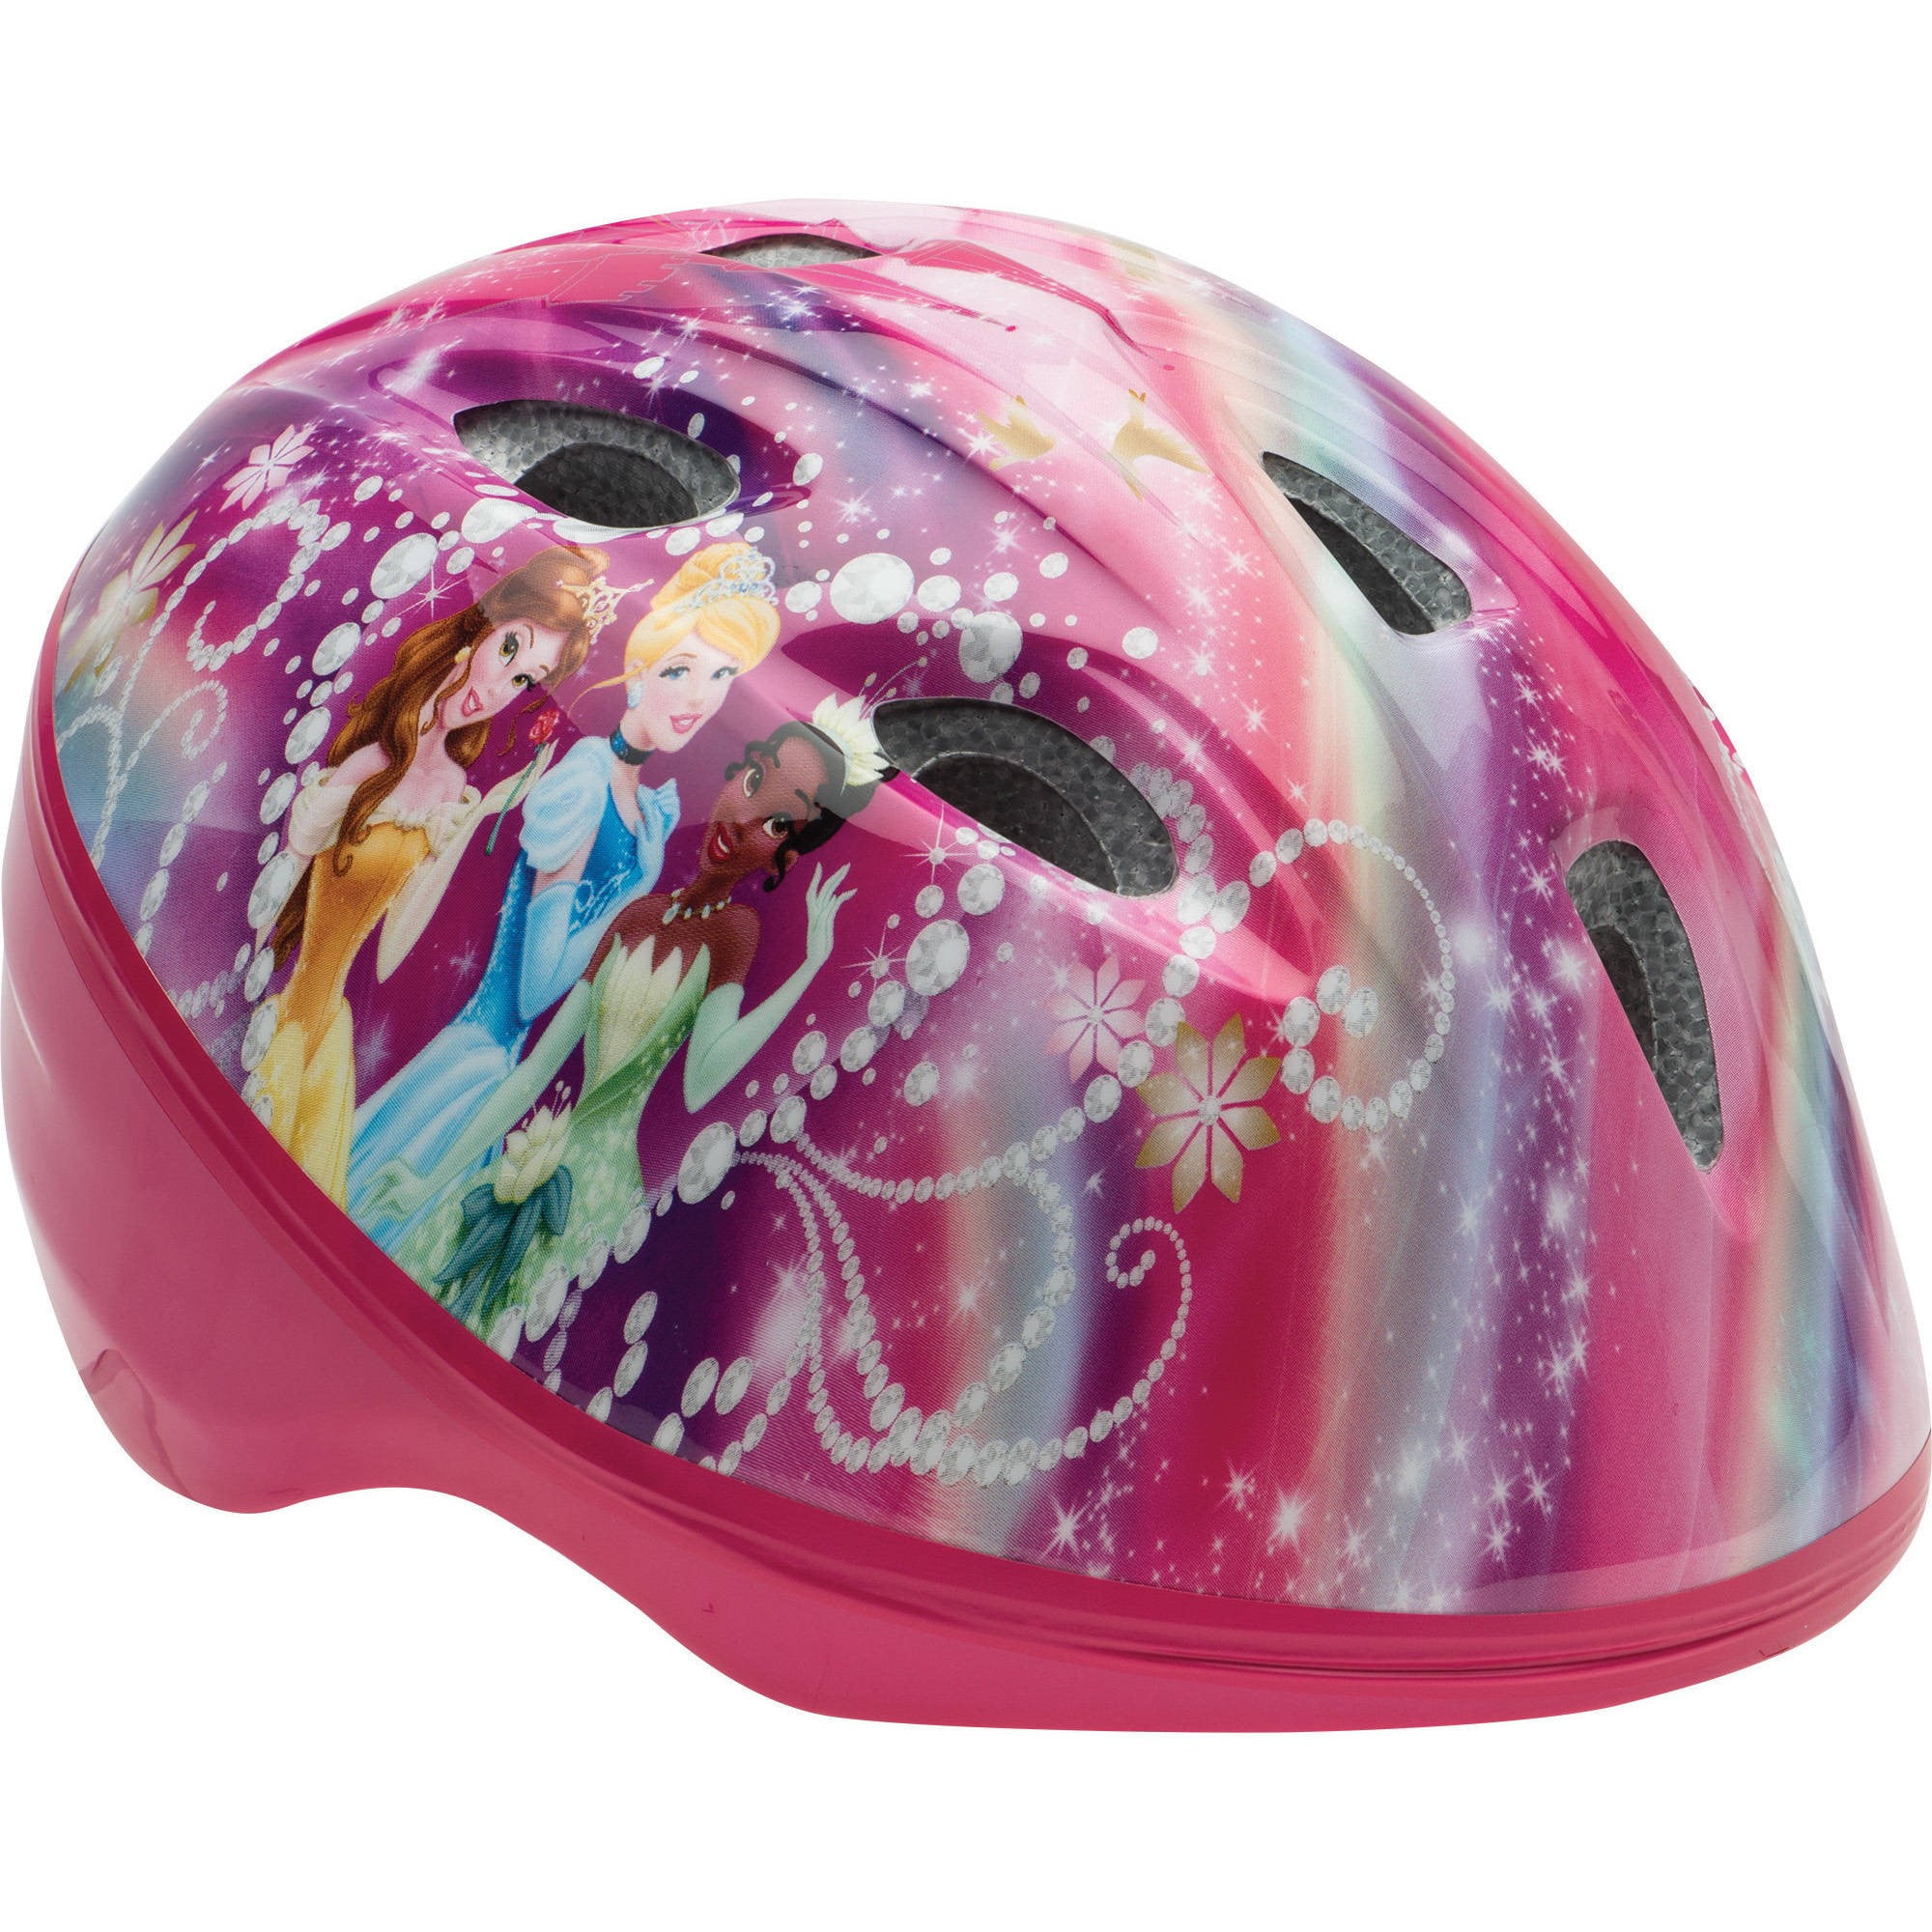 Disney Princess Childrens Kids Bike Cycle Safety Helmet for sale online 